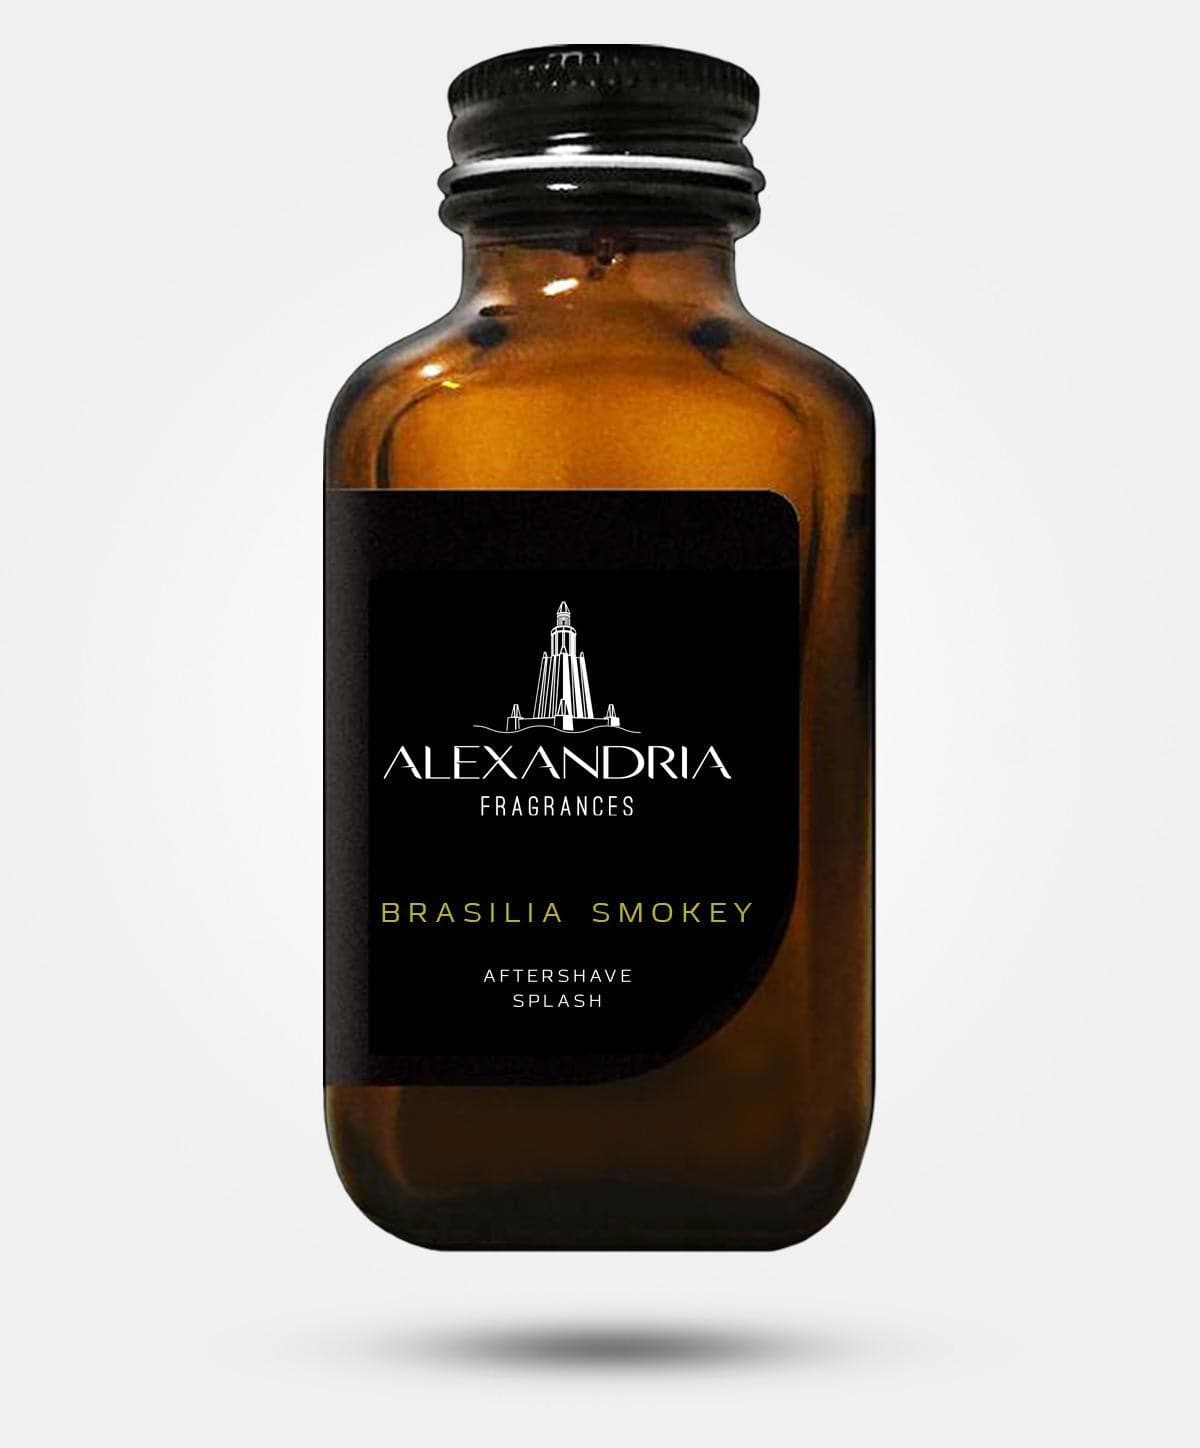 Brasilia Smokey - Aftershave Splash